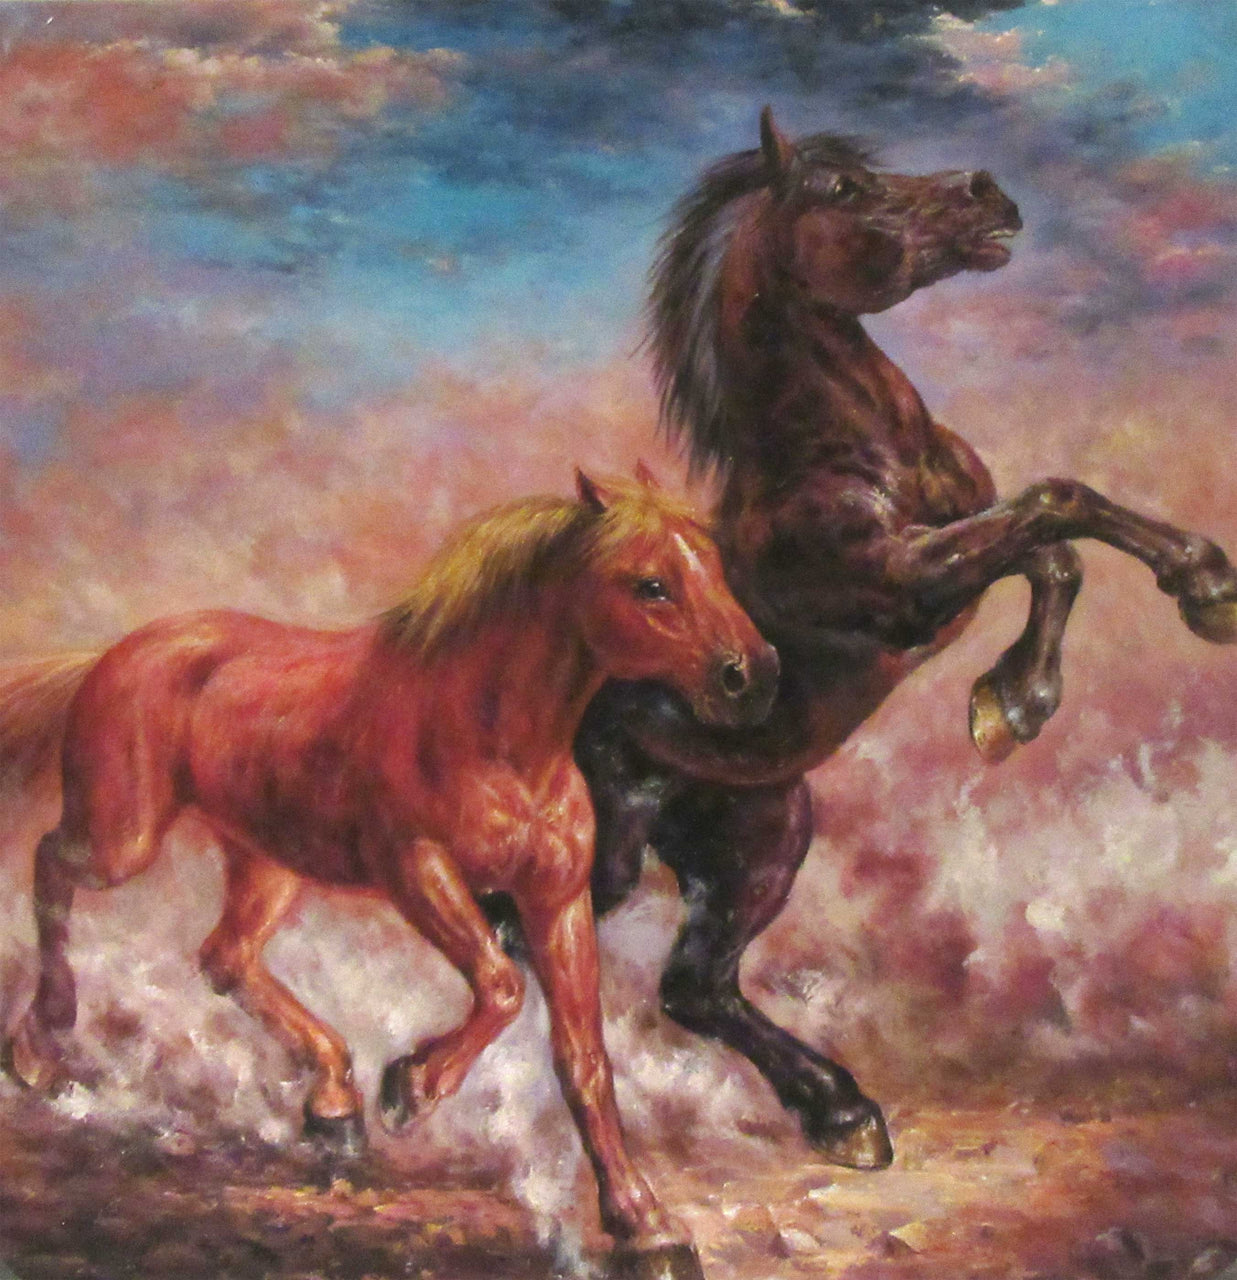 AN4920894 - 48"x48" Original Oil Painting